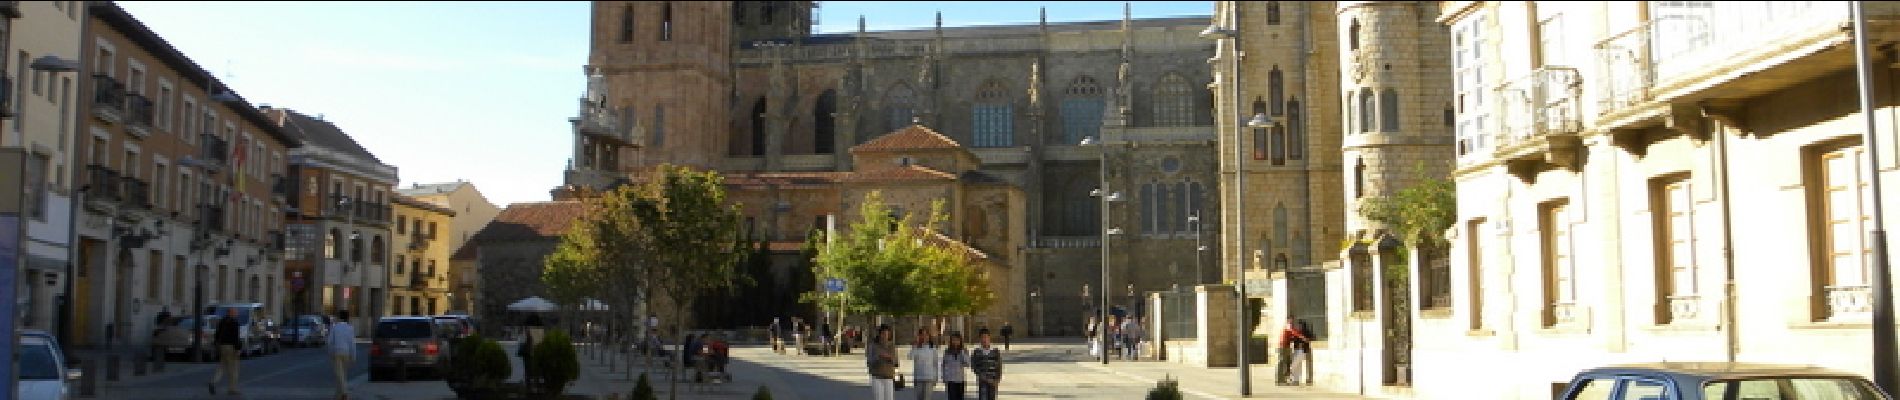 Point d'intérêt Astorga - Astorga - Photo